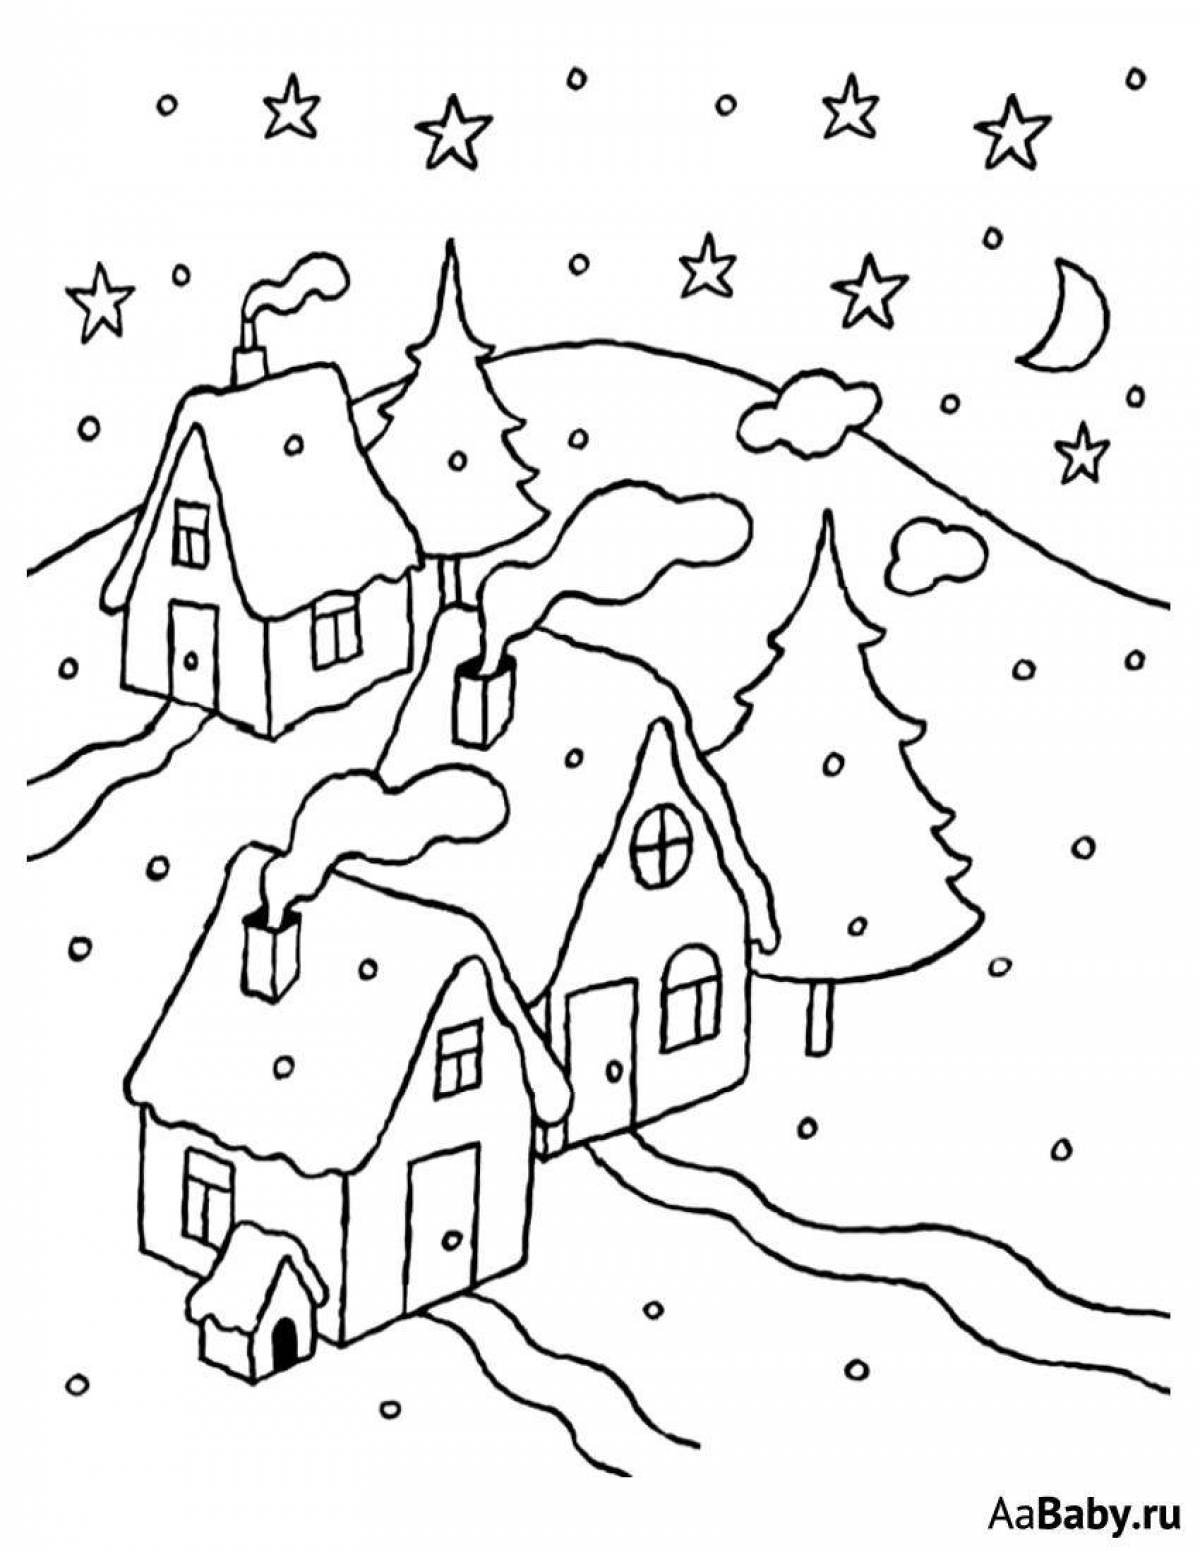 Fun Snowfall Coloring Page for Teens